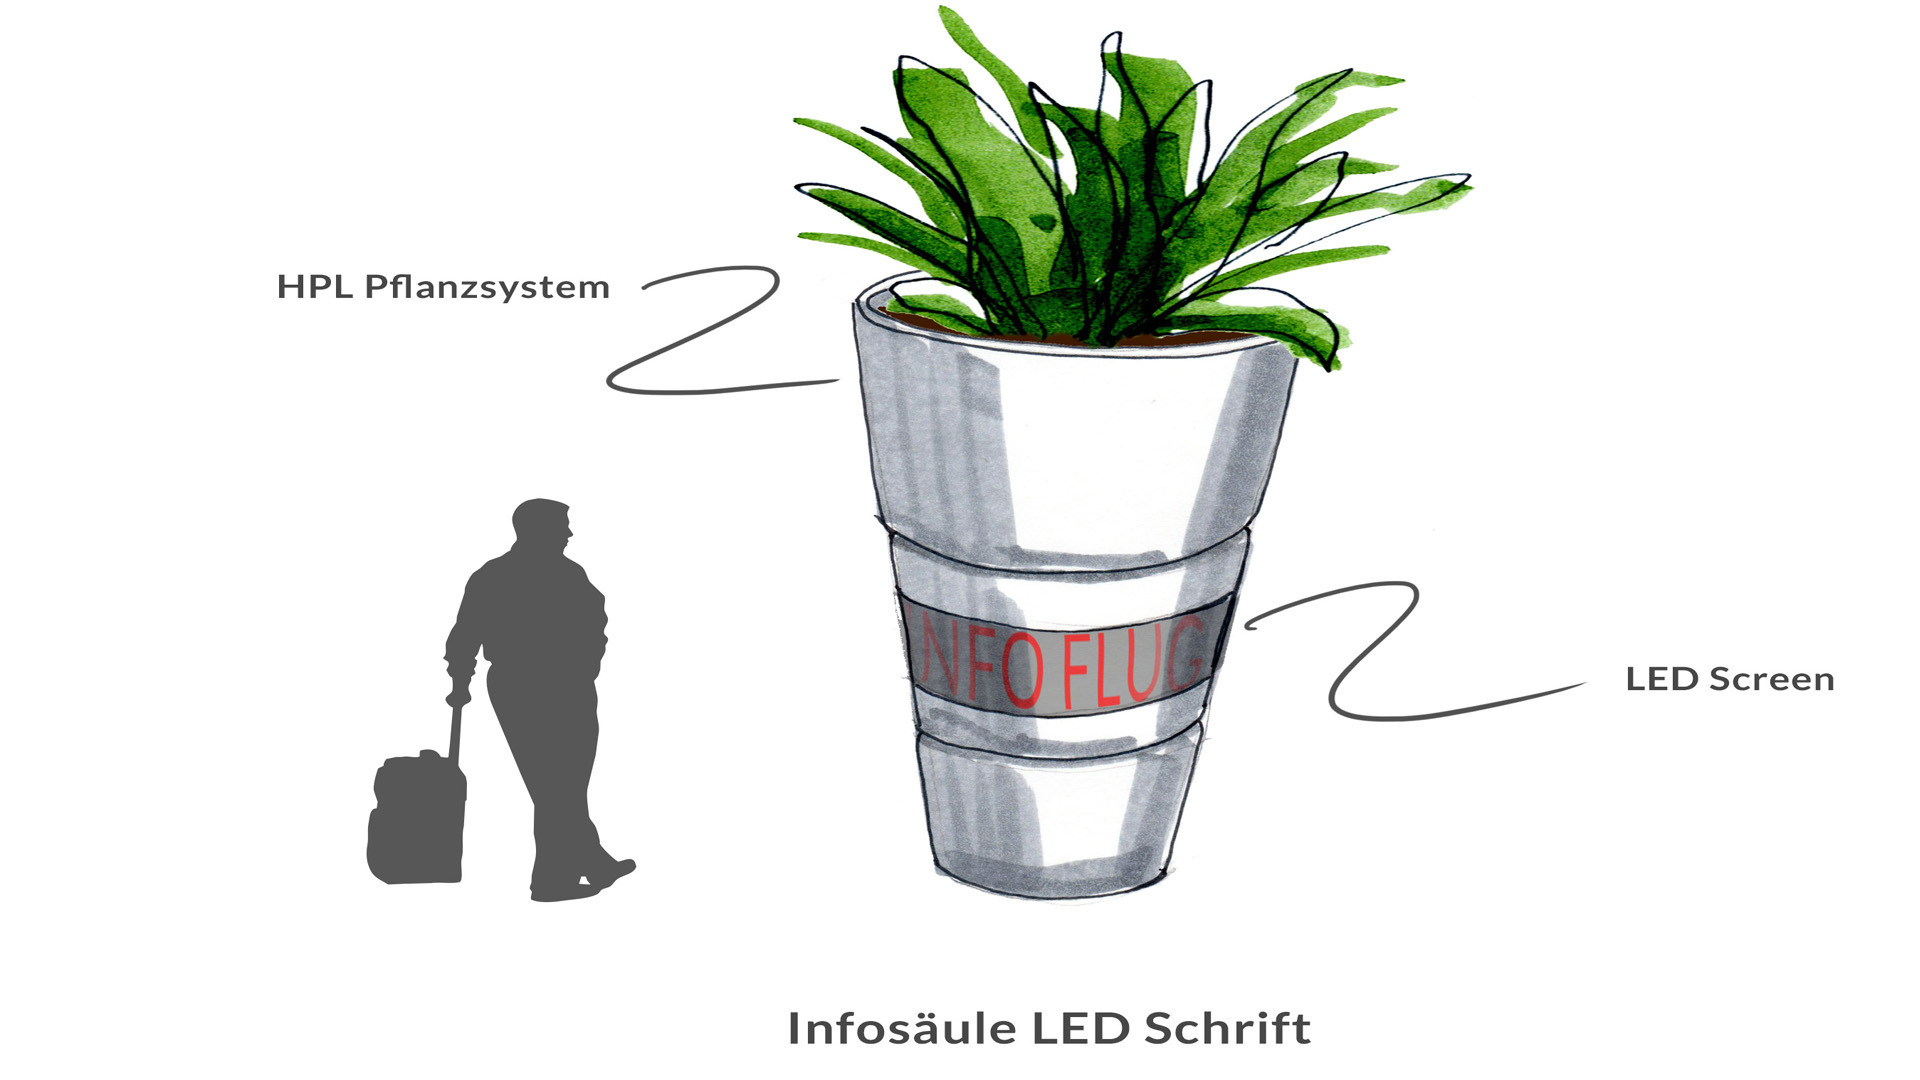 HPL Pflanzgefäß mit integriertem LED Screen